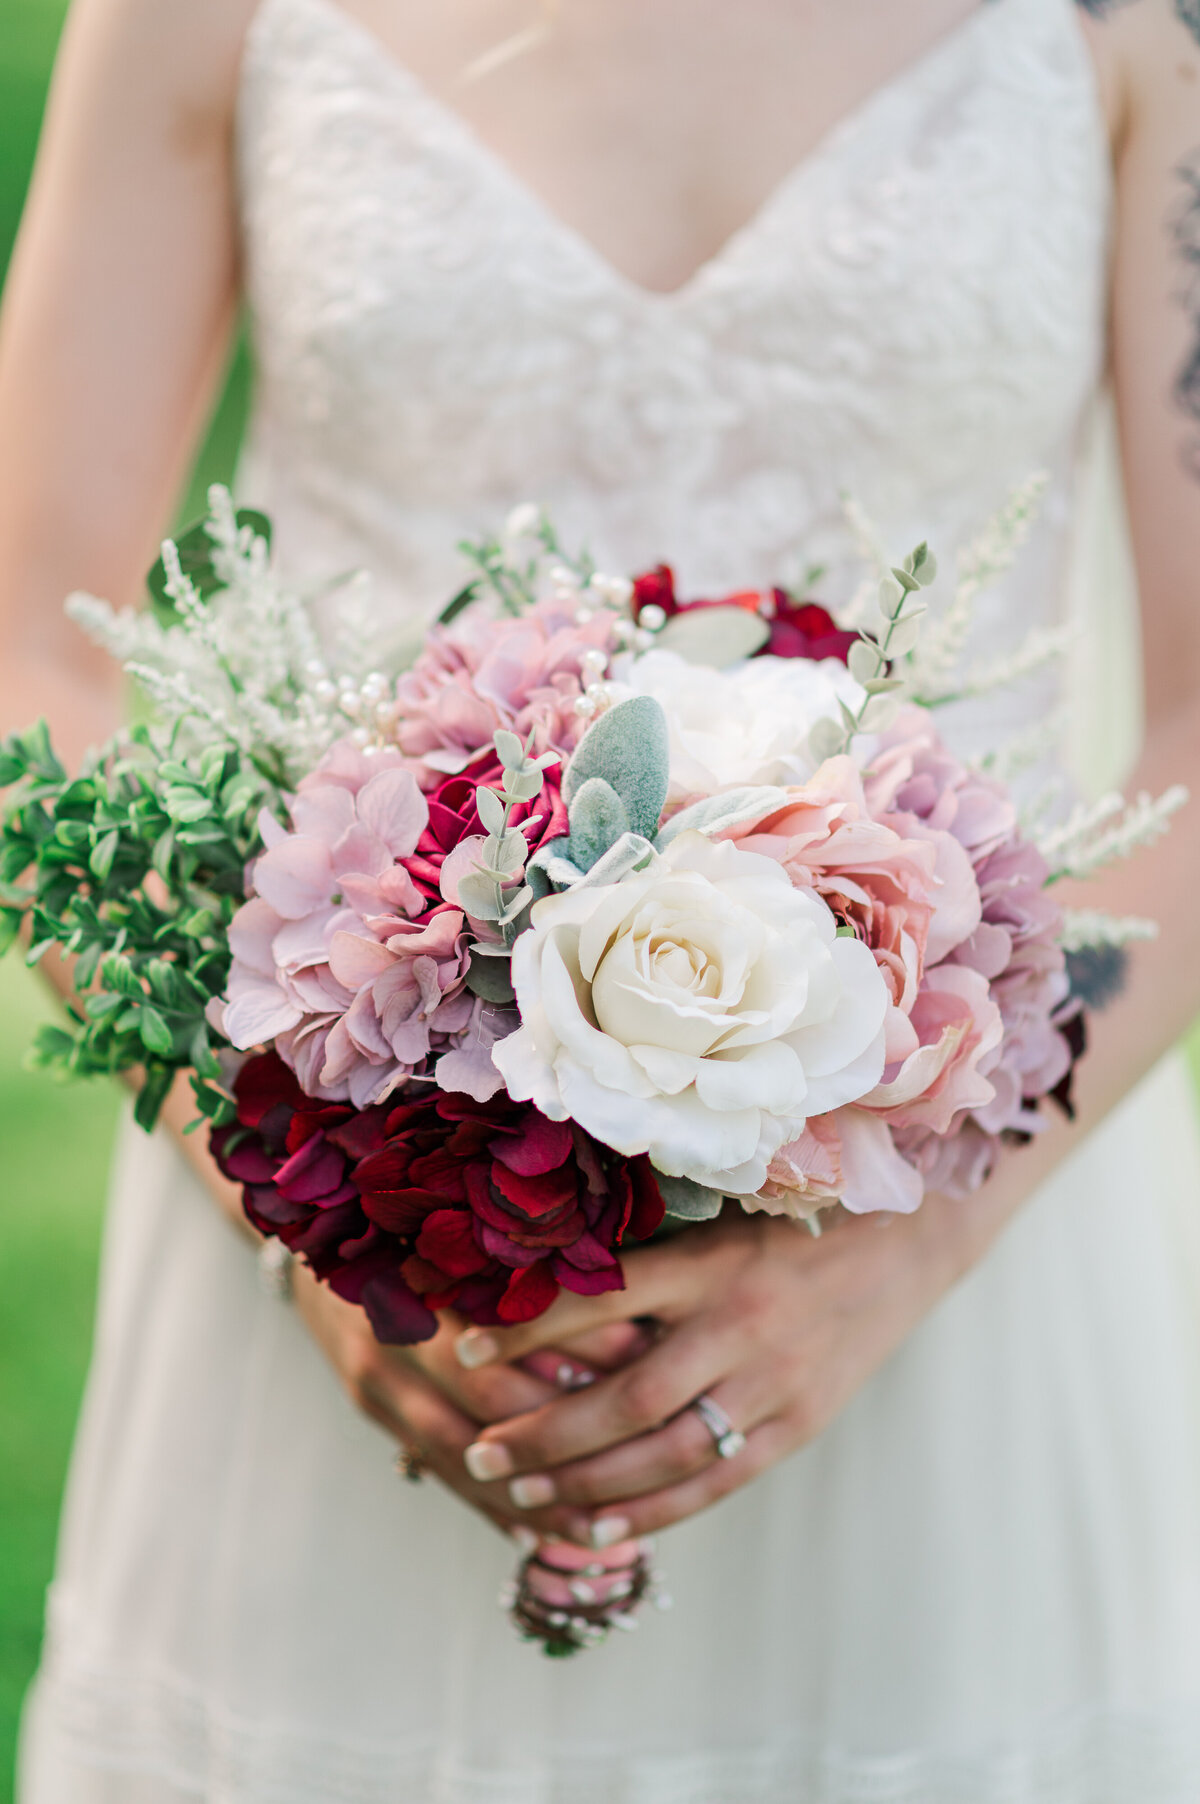 Bride Holding Flower Bouquet on Wedding Day